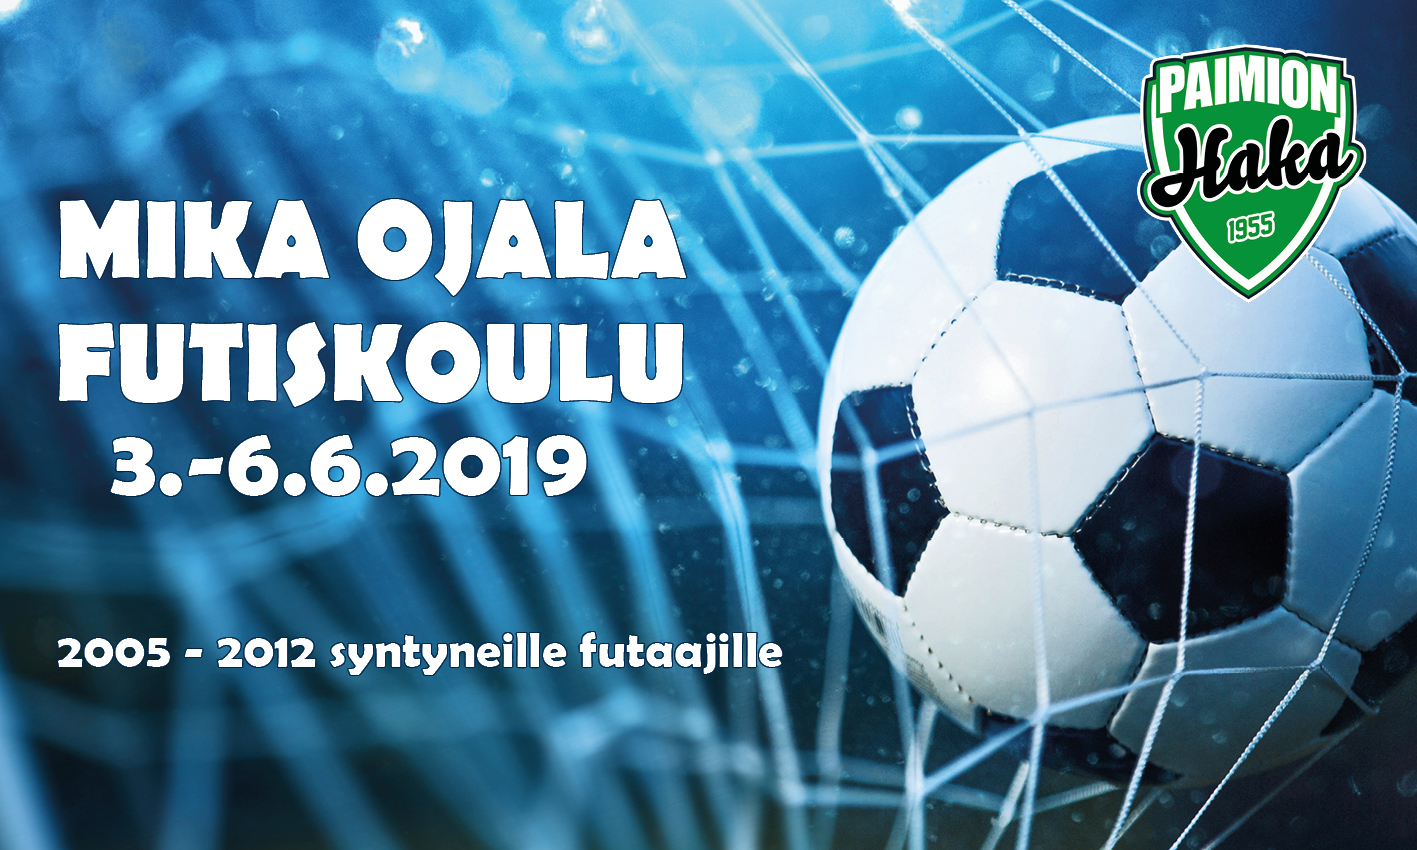 Mika Ojala Futiskoulu 3-6.6.2019